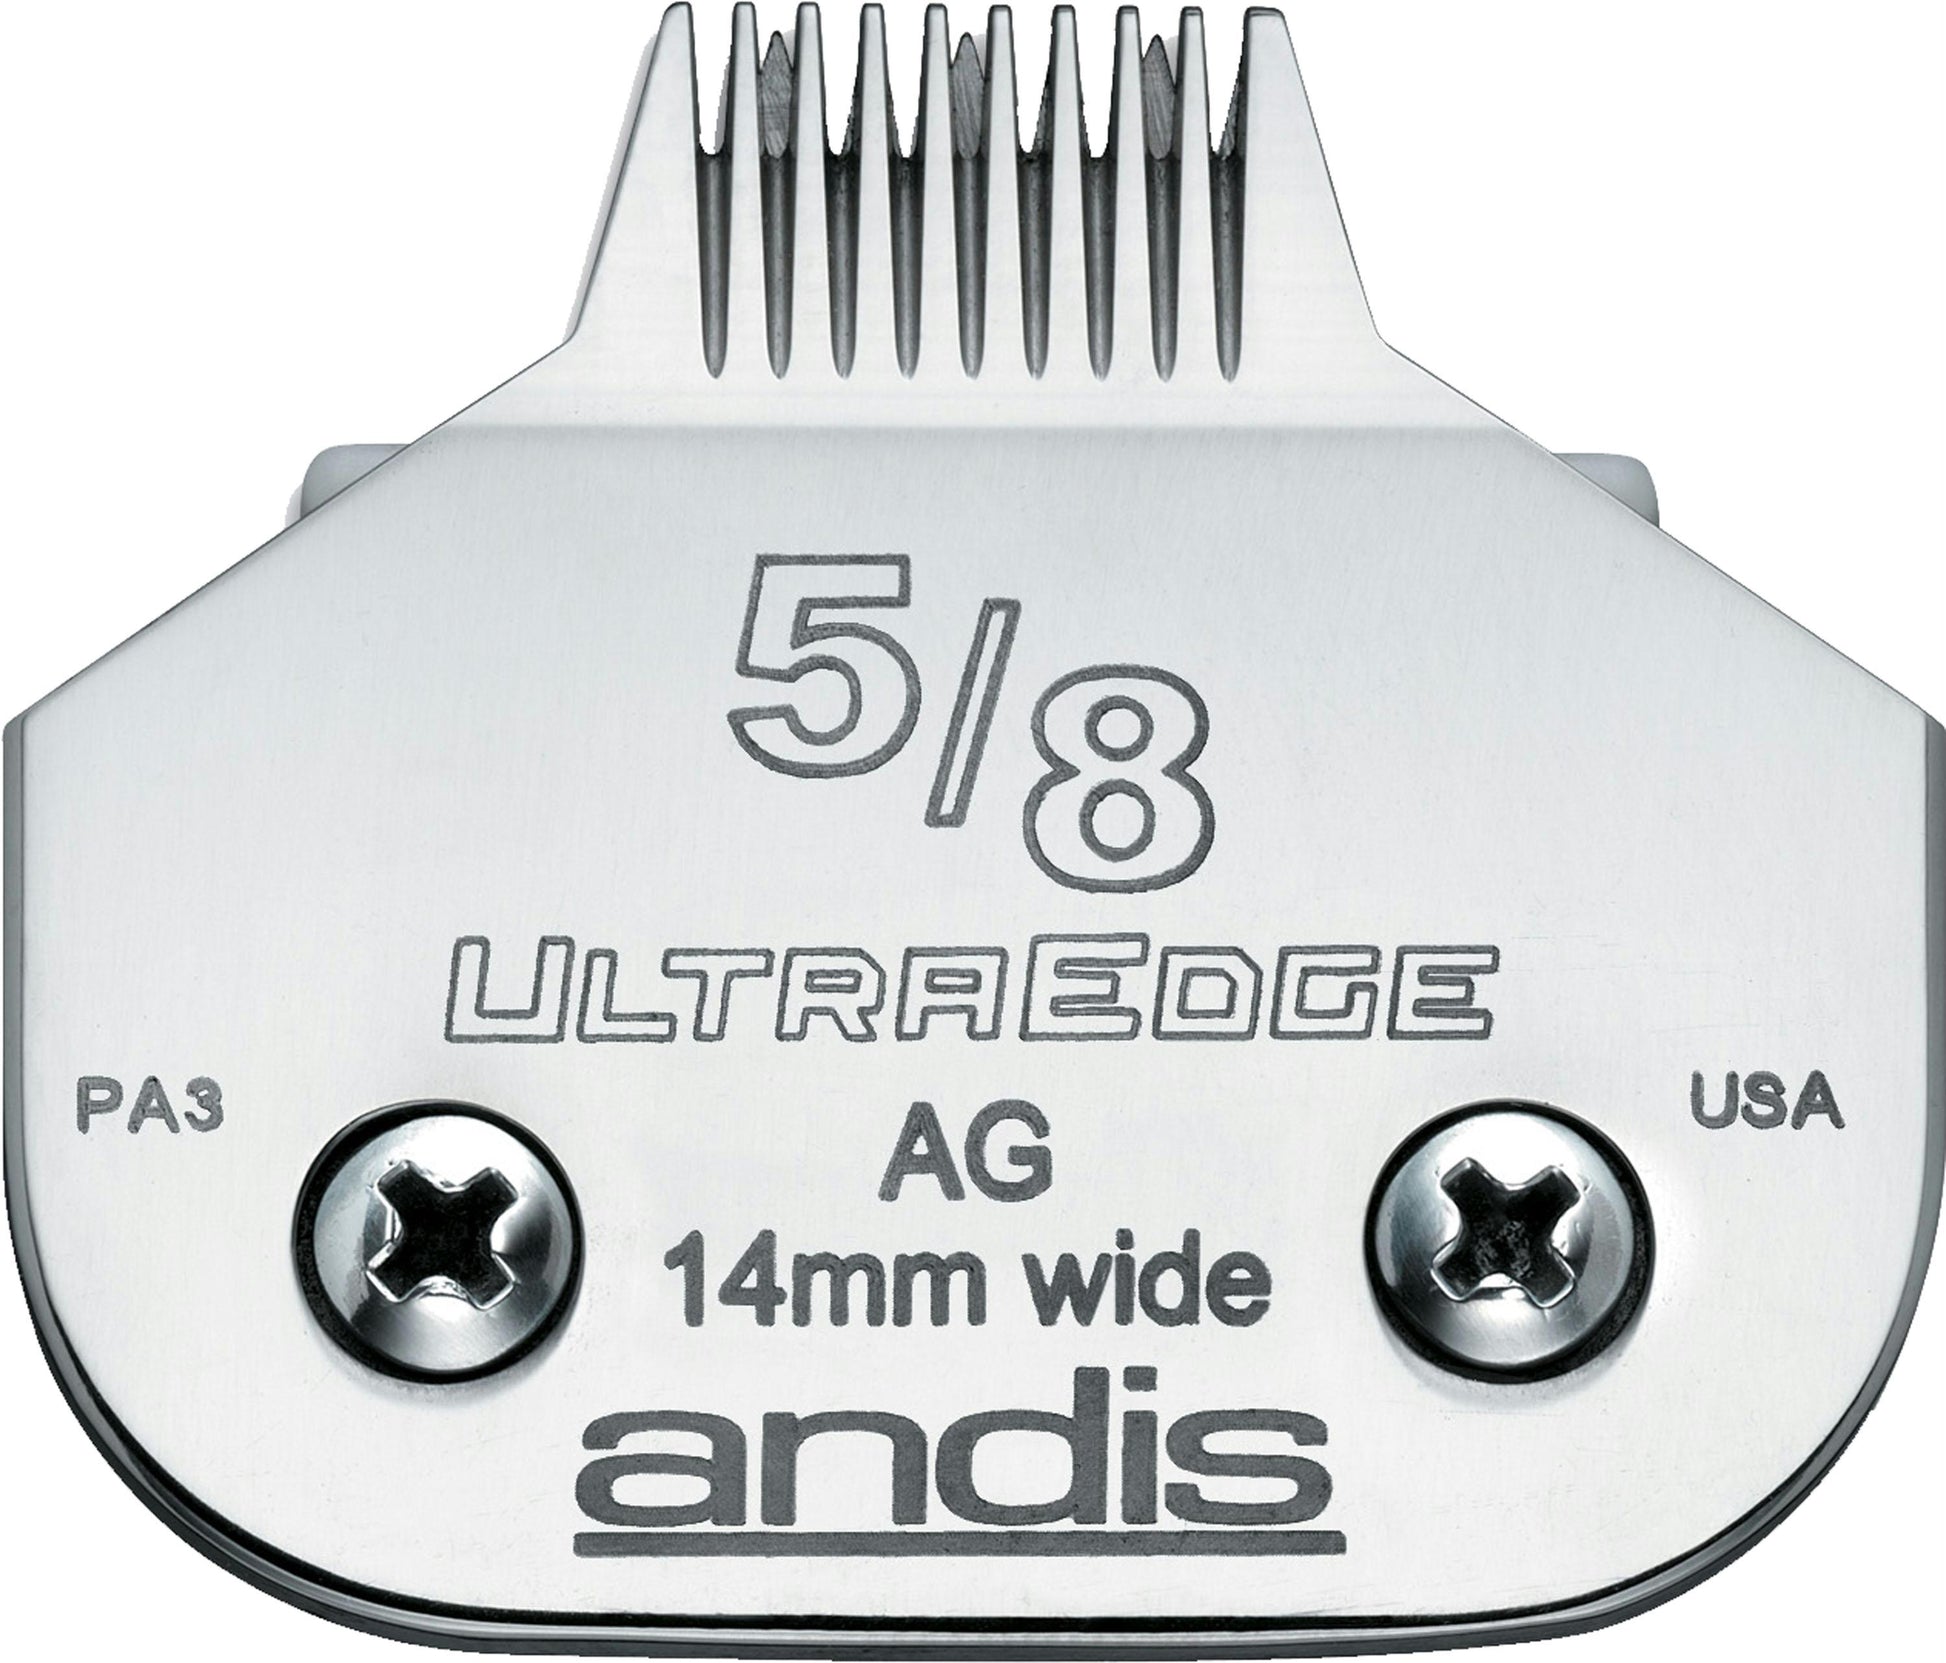 Ultraedge Blade - aomega-products